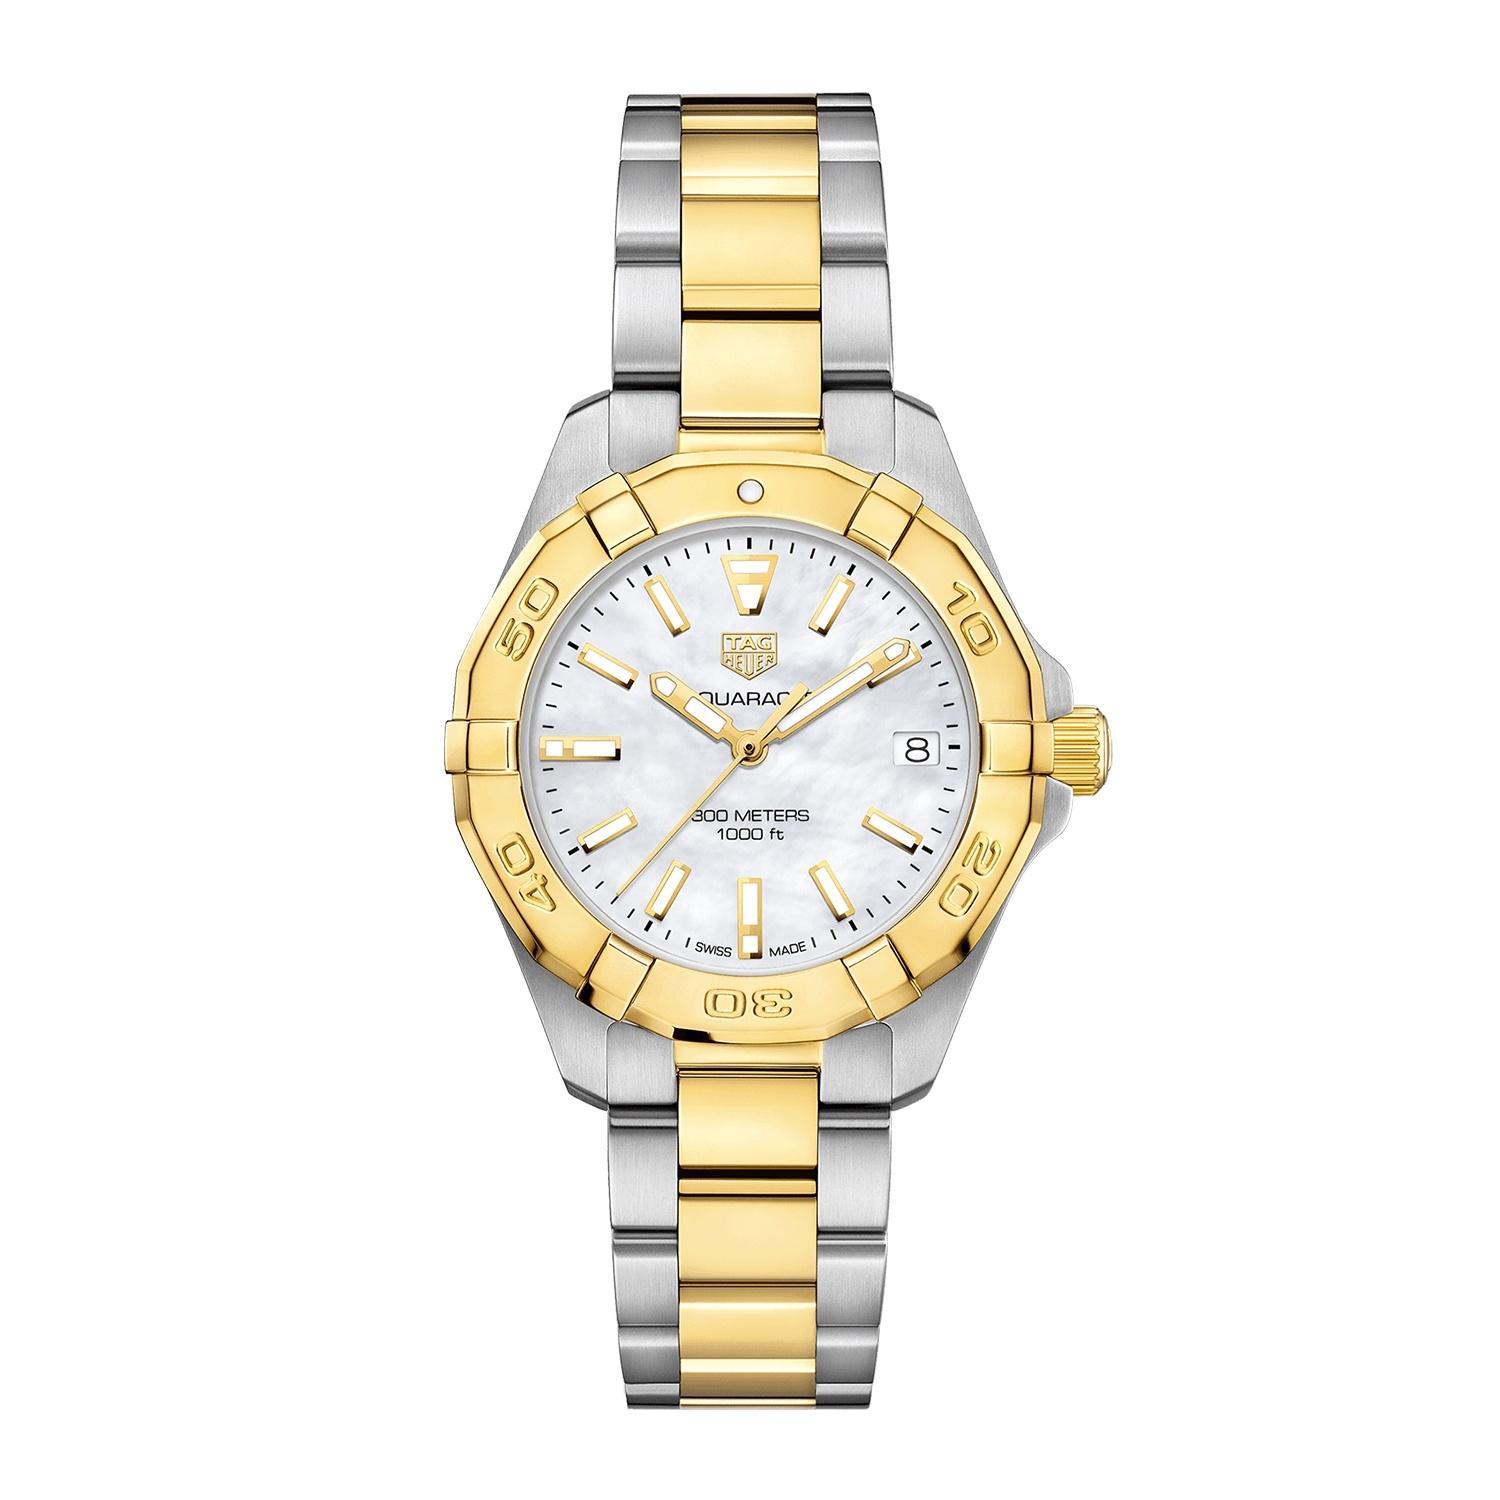 Ladies Tag Heuer Aquaracer Timepiece